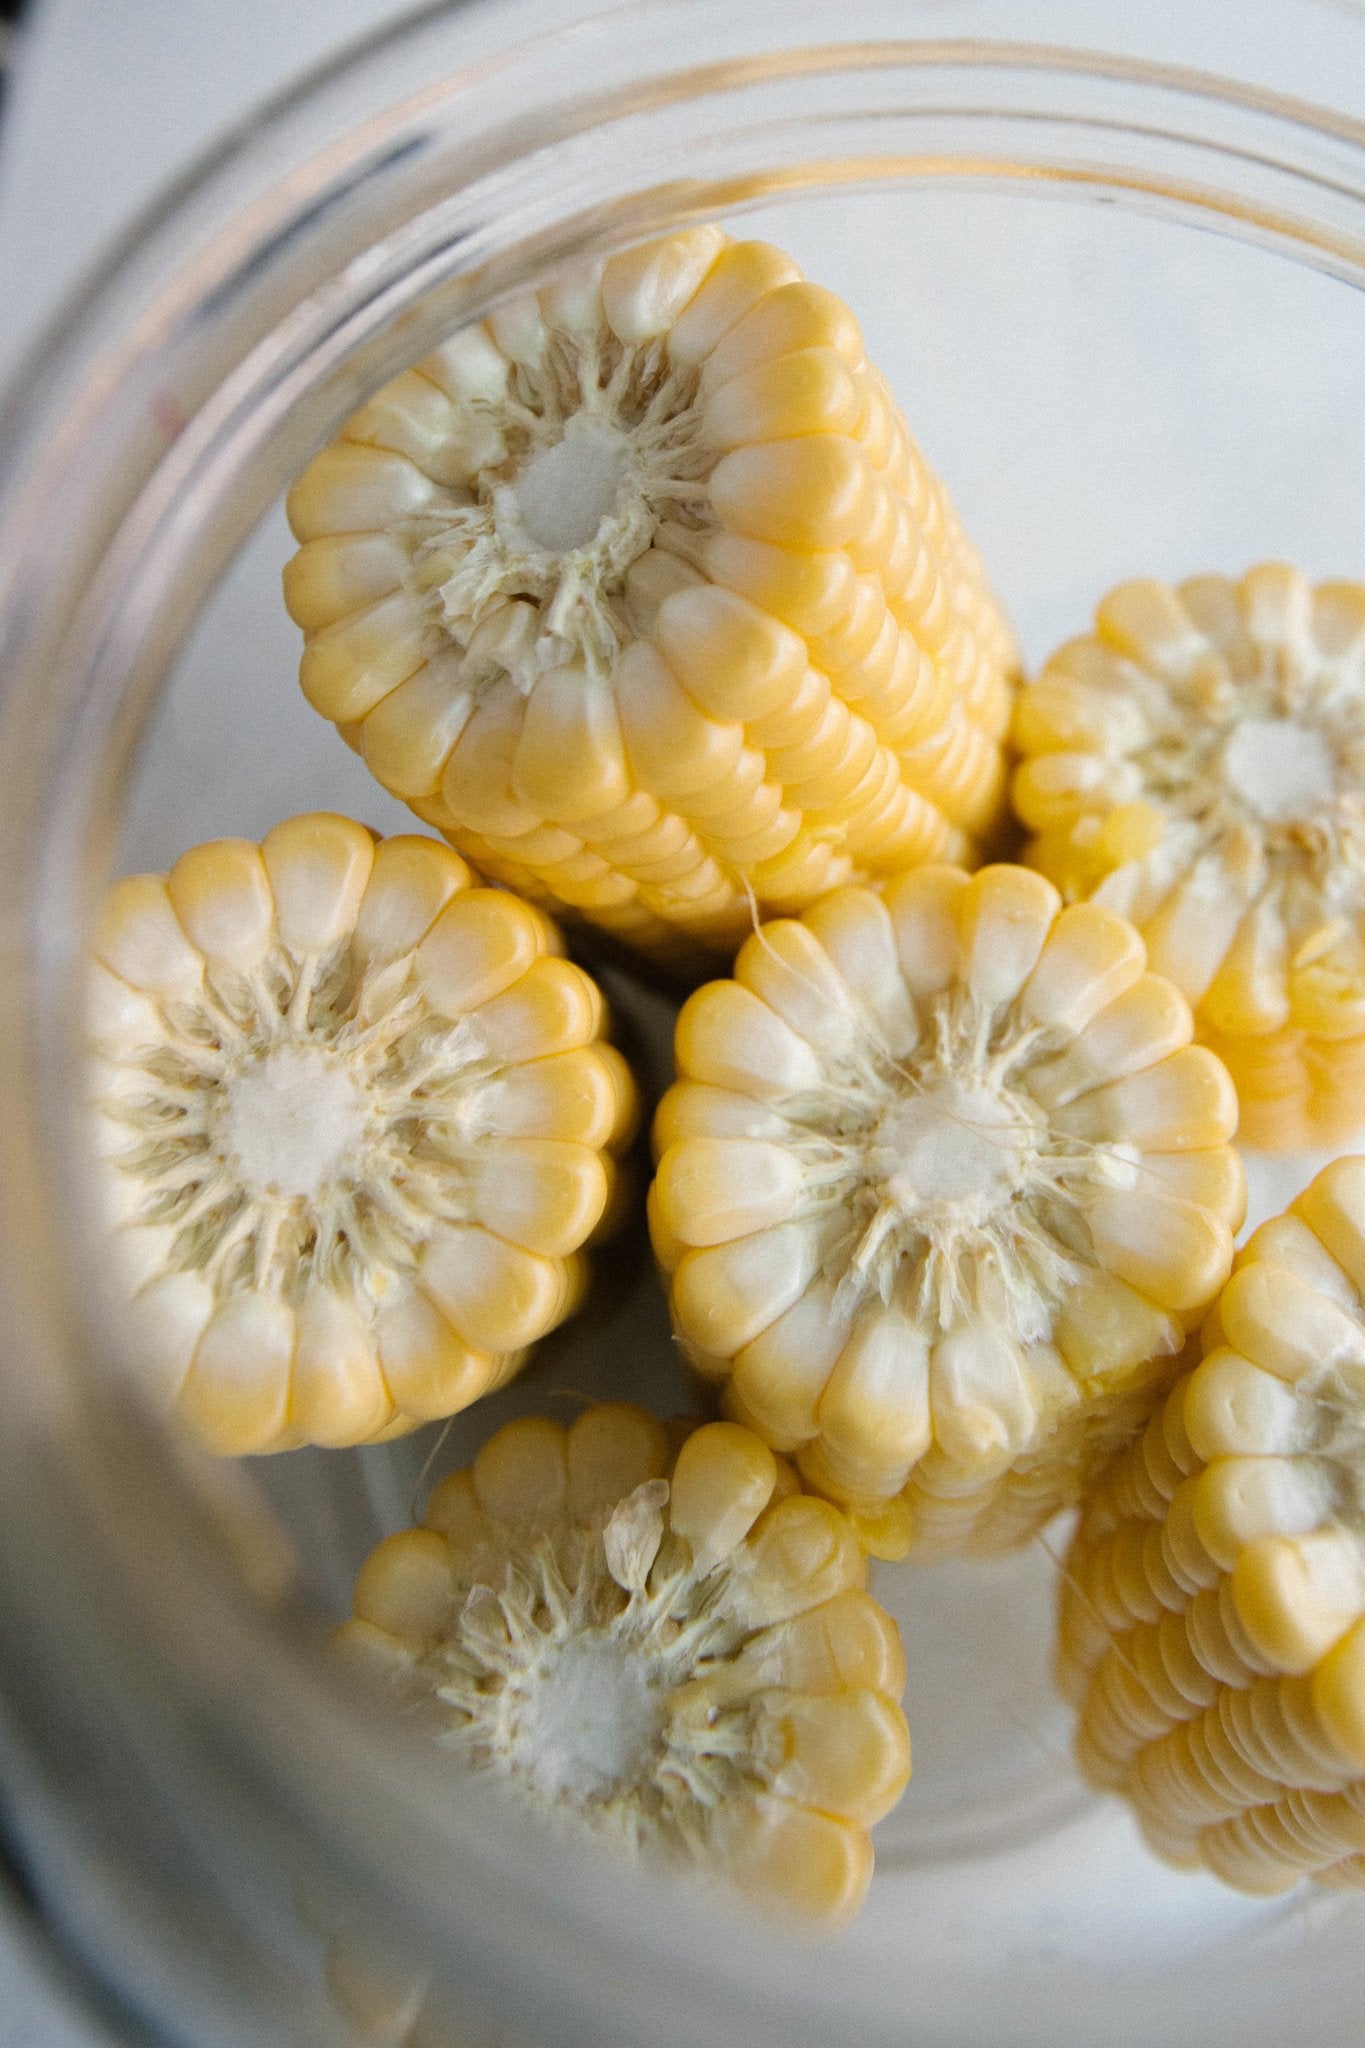 Recipe: Fermented Corn - FarmSteady